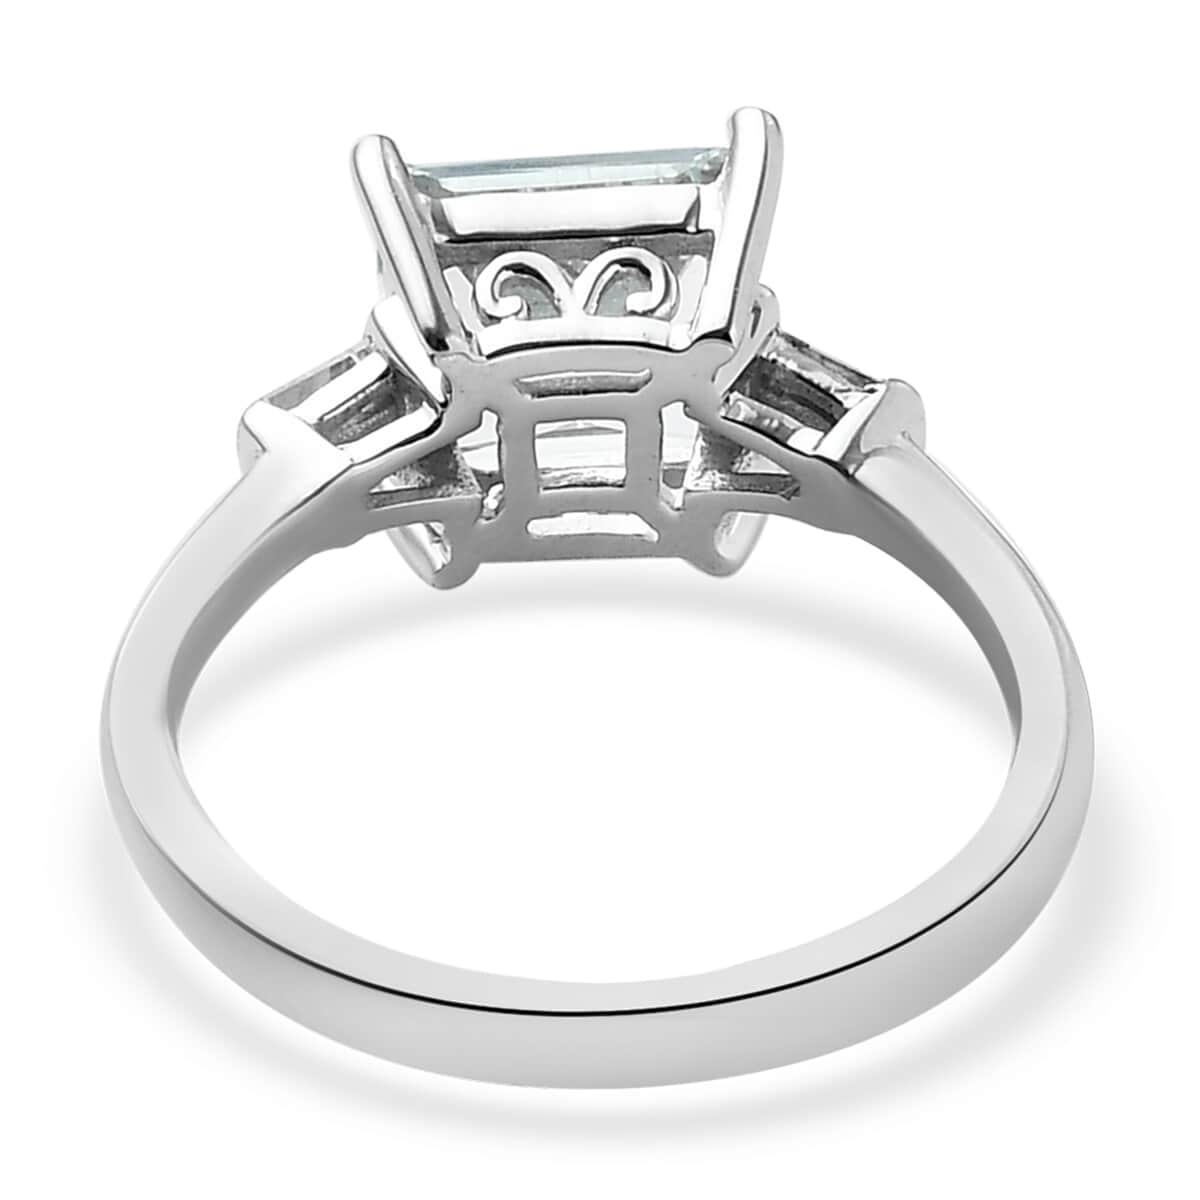 Luxoro 10K White Gold Premium Espirito Santo Aquamarine and Diamond Ring (Size 9.0) 2.65 Grams 2.25 ctw image number 4